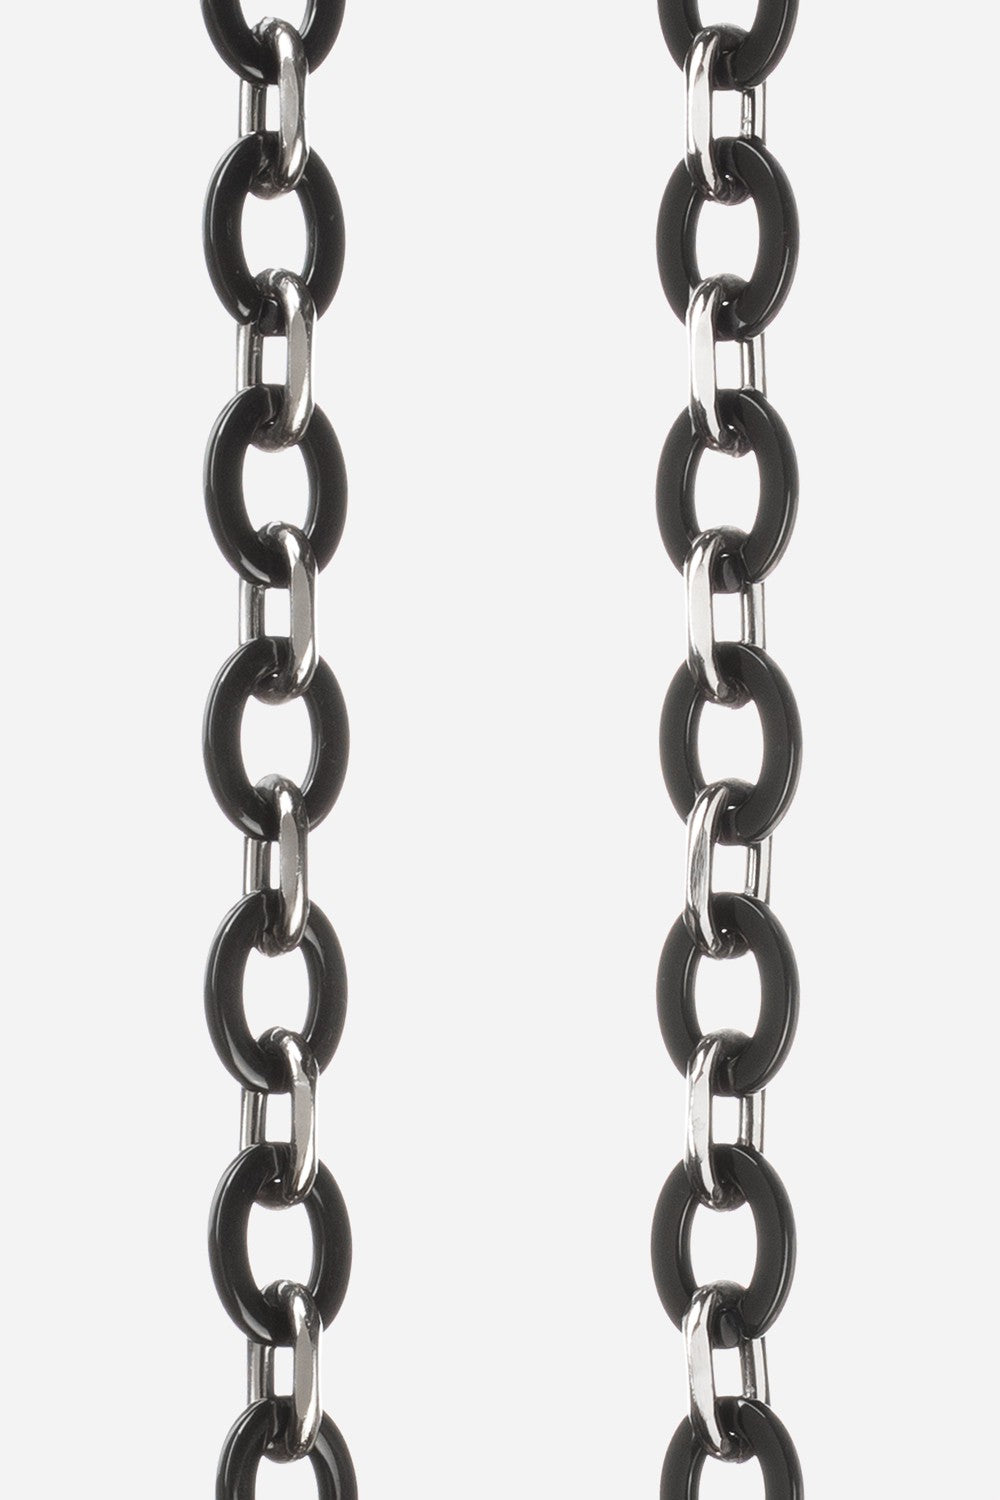 Cassy Long Chain Black 120 cm